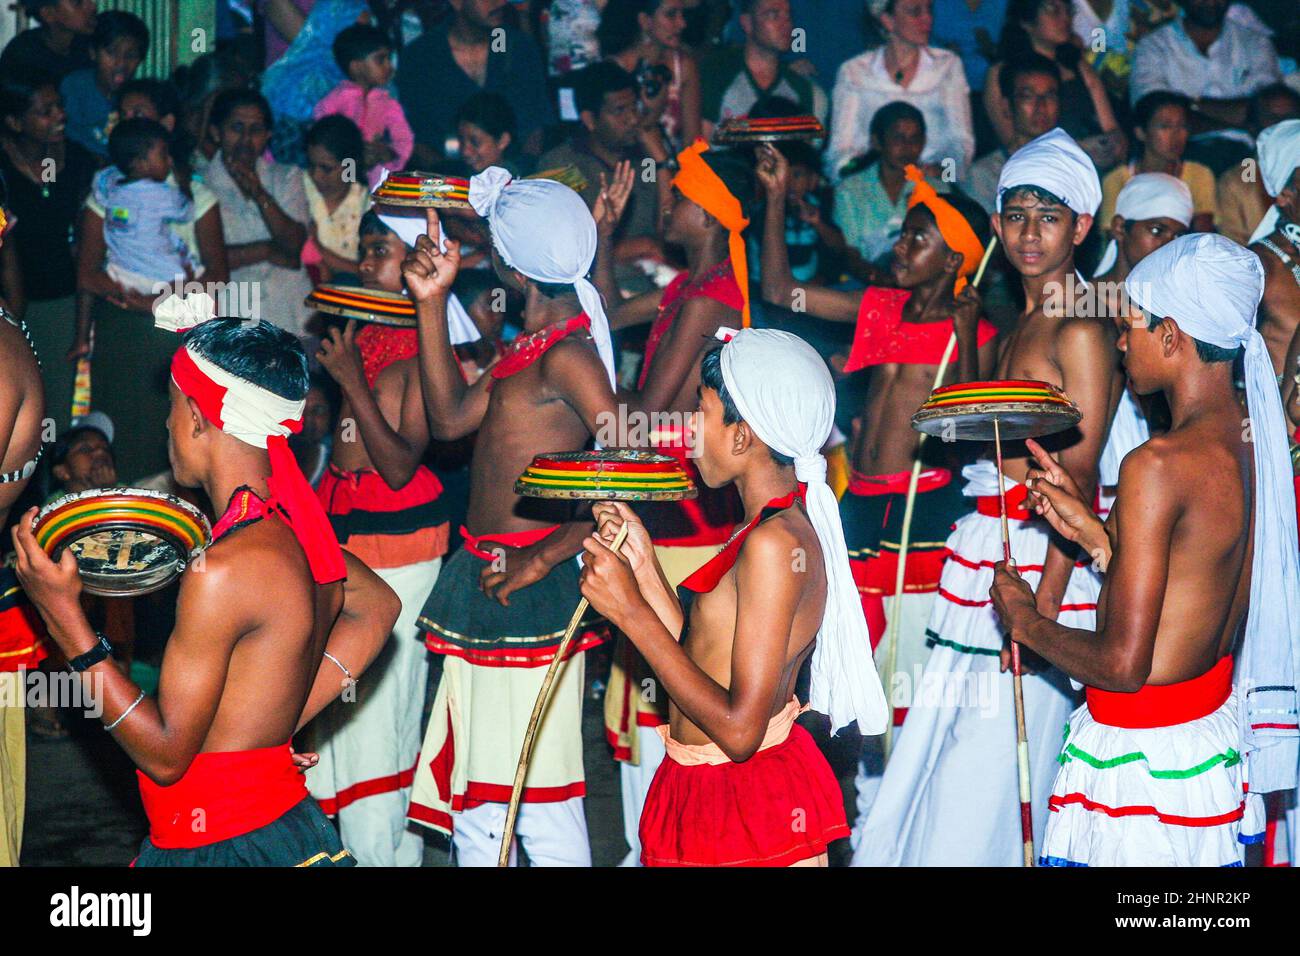 Jongleur nehmen am Festival Pera Hera in Kandy Teil Stockfoto